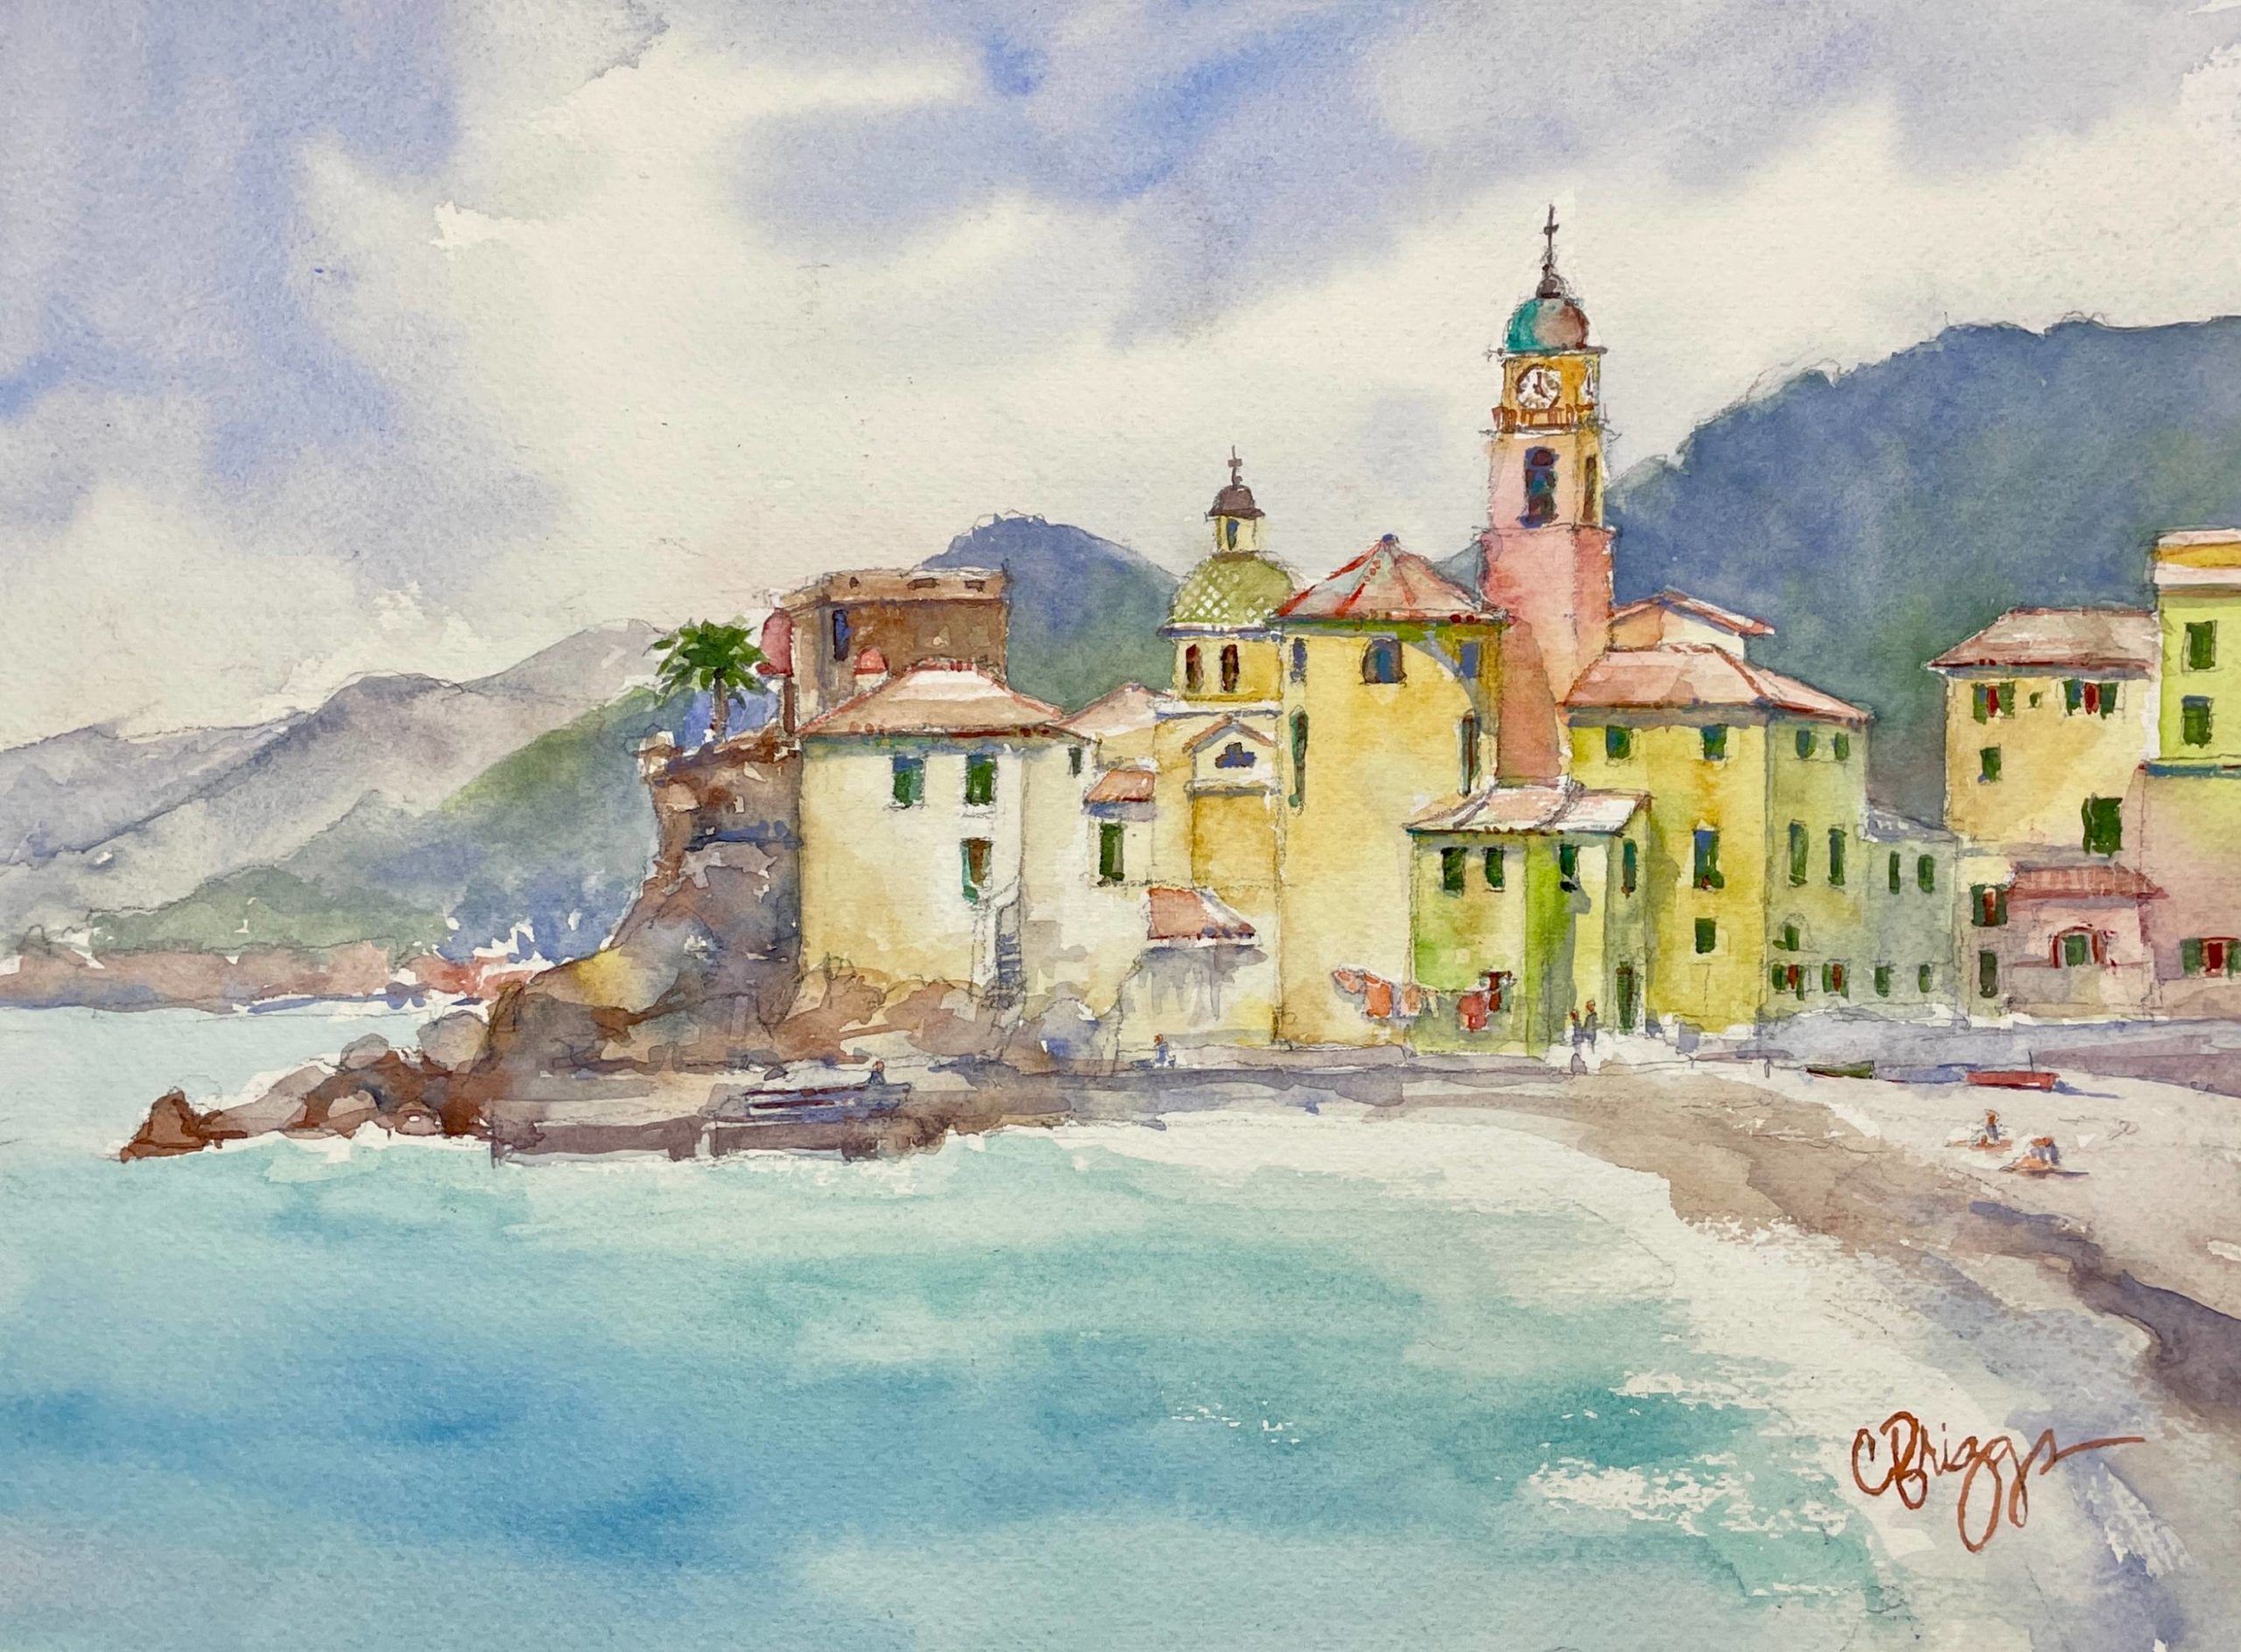 Cindy Briggs, "Camogli, Italy," 2019, watercolor, 9 x 13 in., Private collection, Plein air